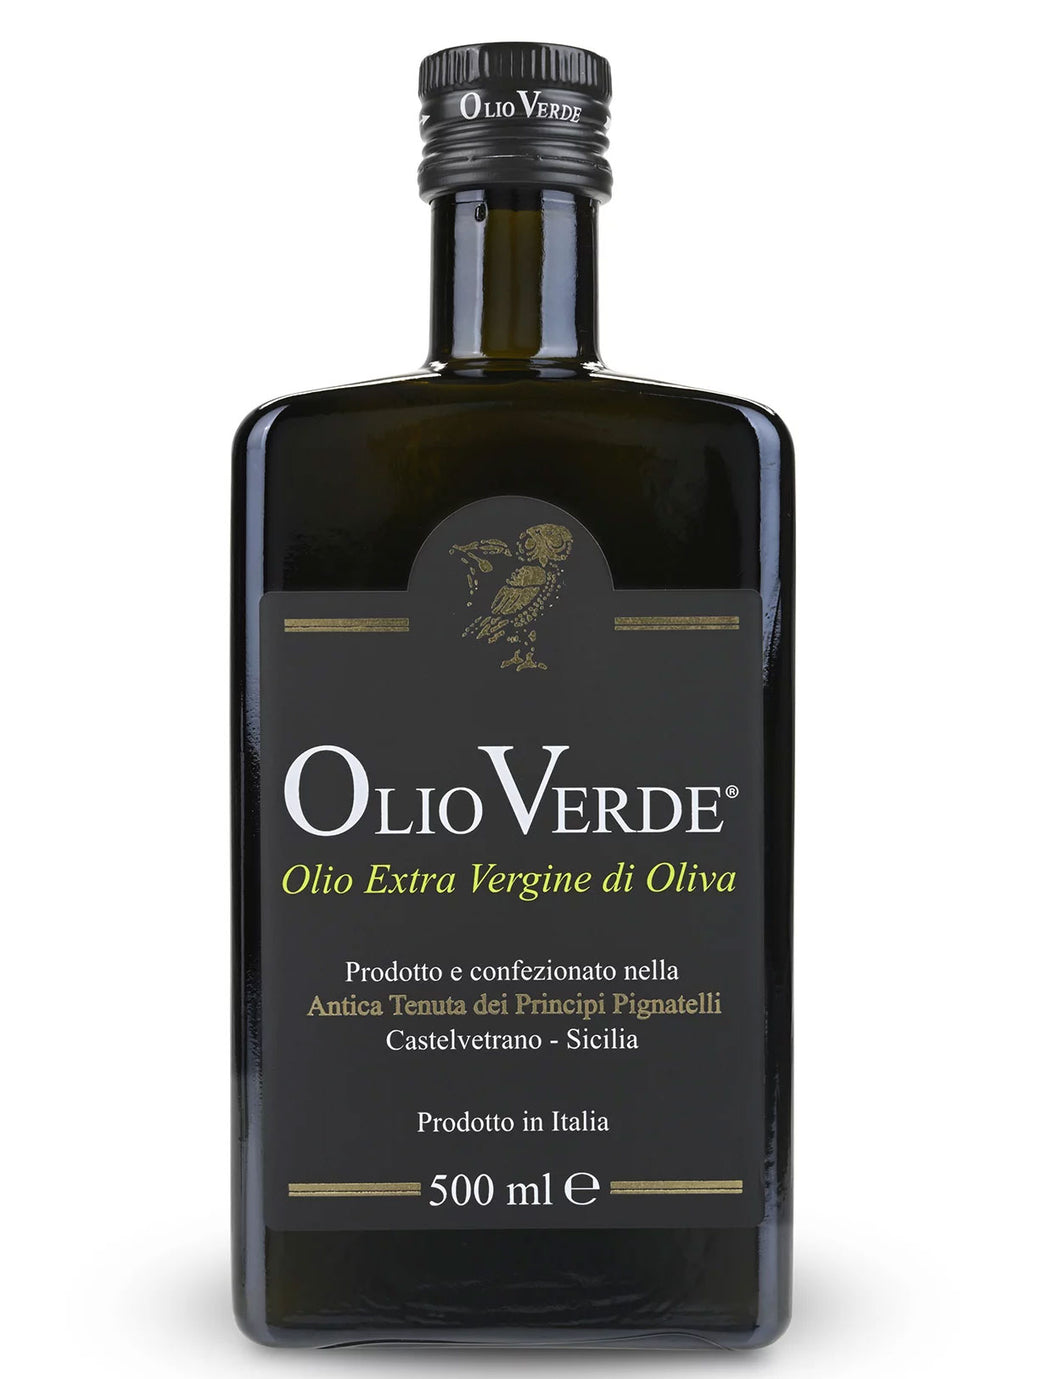 Extra Virgin Olive Oil from Olio Verde